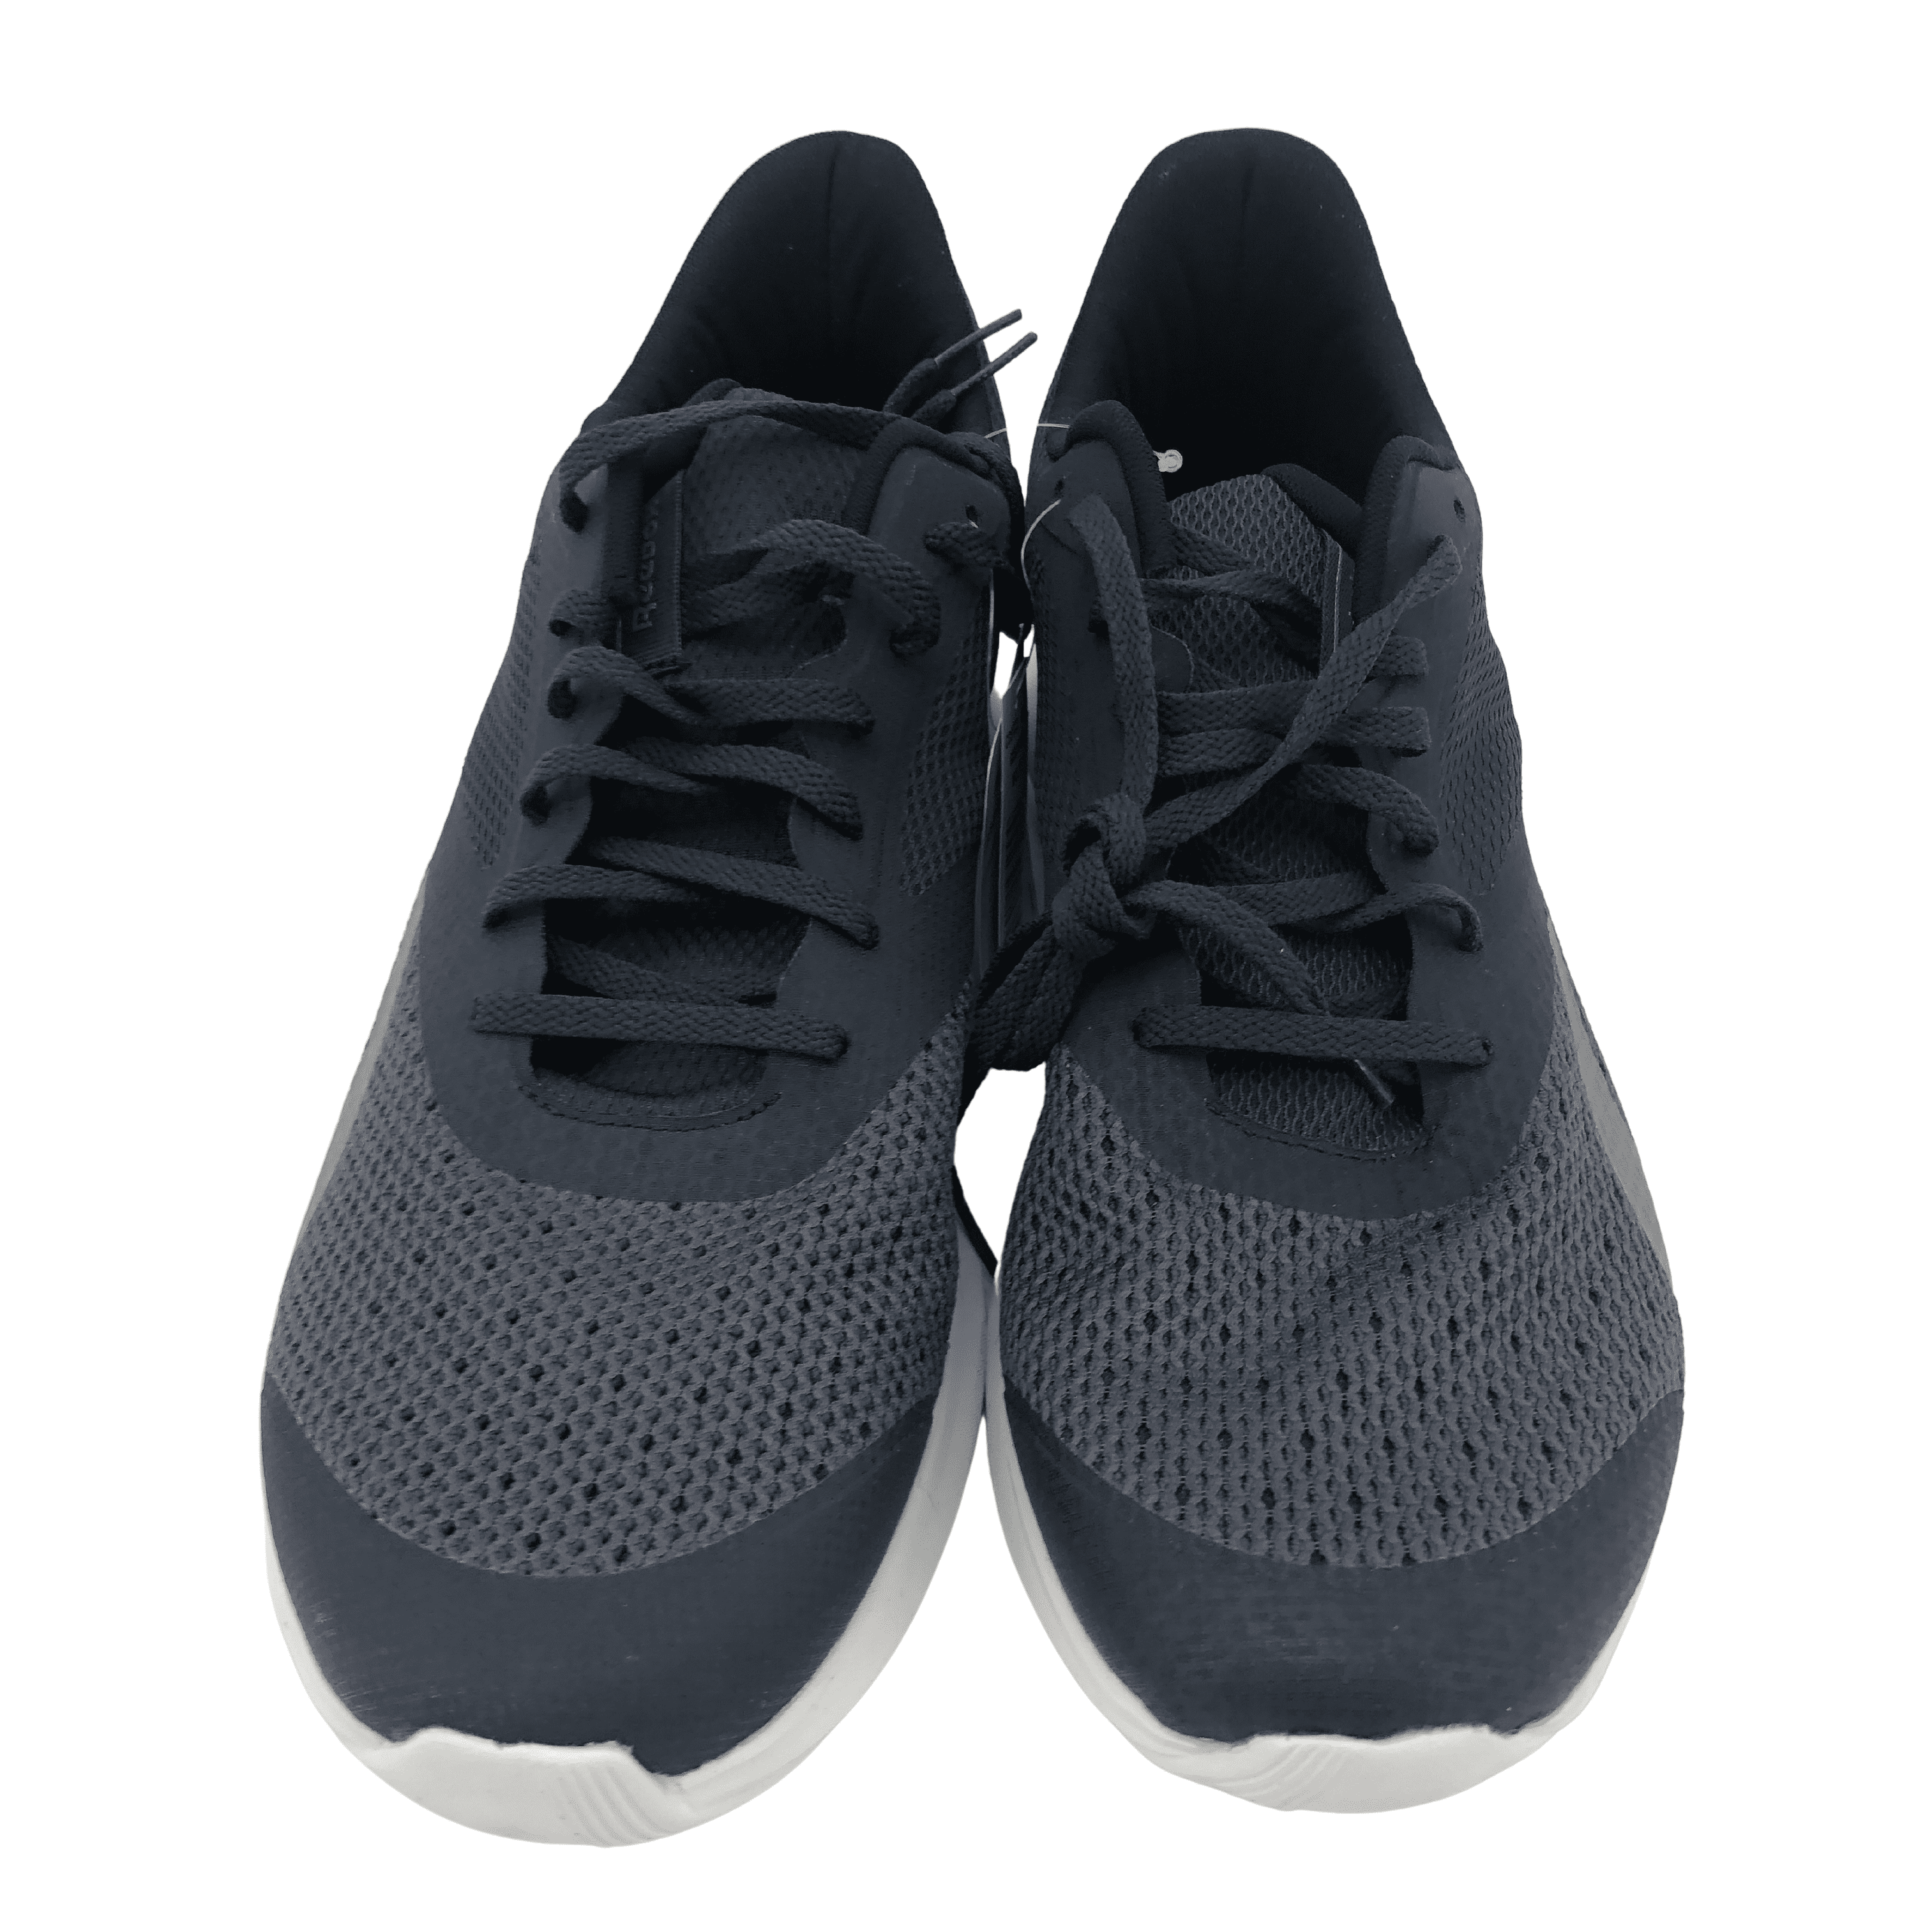 Reebok Men's Running Shoes / Speed Breeze 2.0 / Navy Blue / Size 13